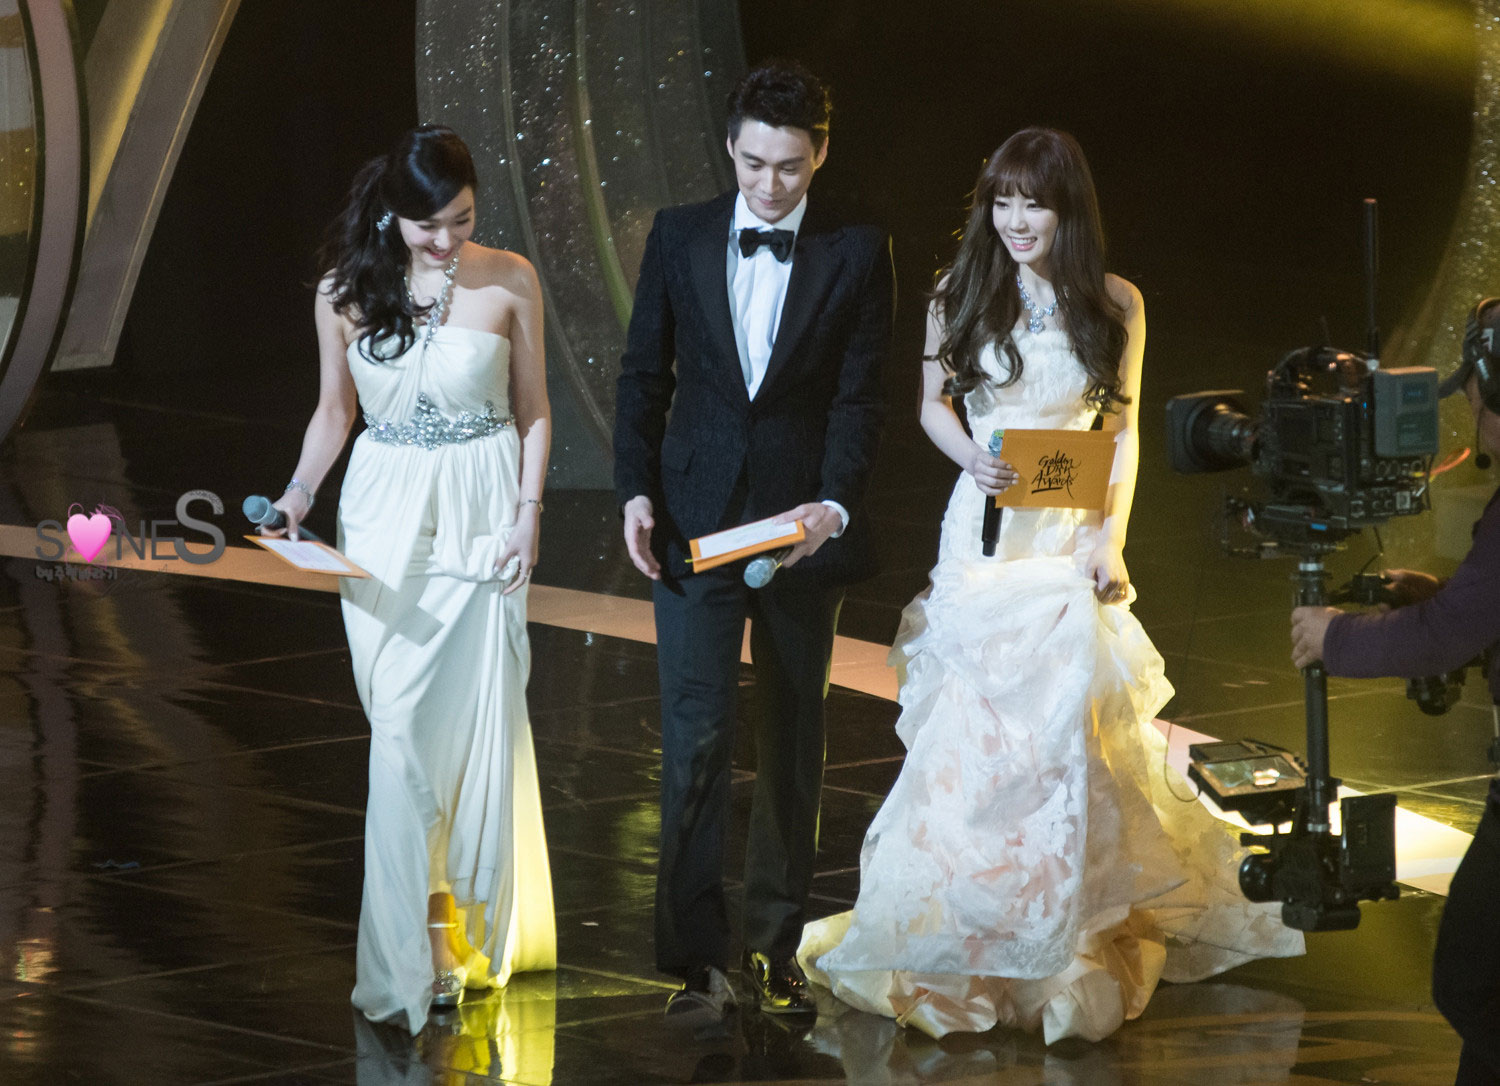 TaeNy Golden Disk Awards 2014